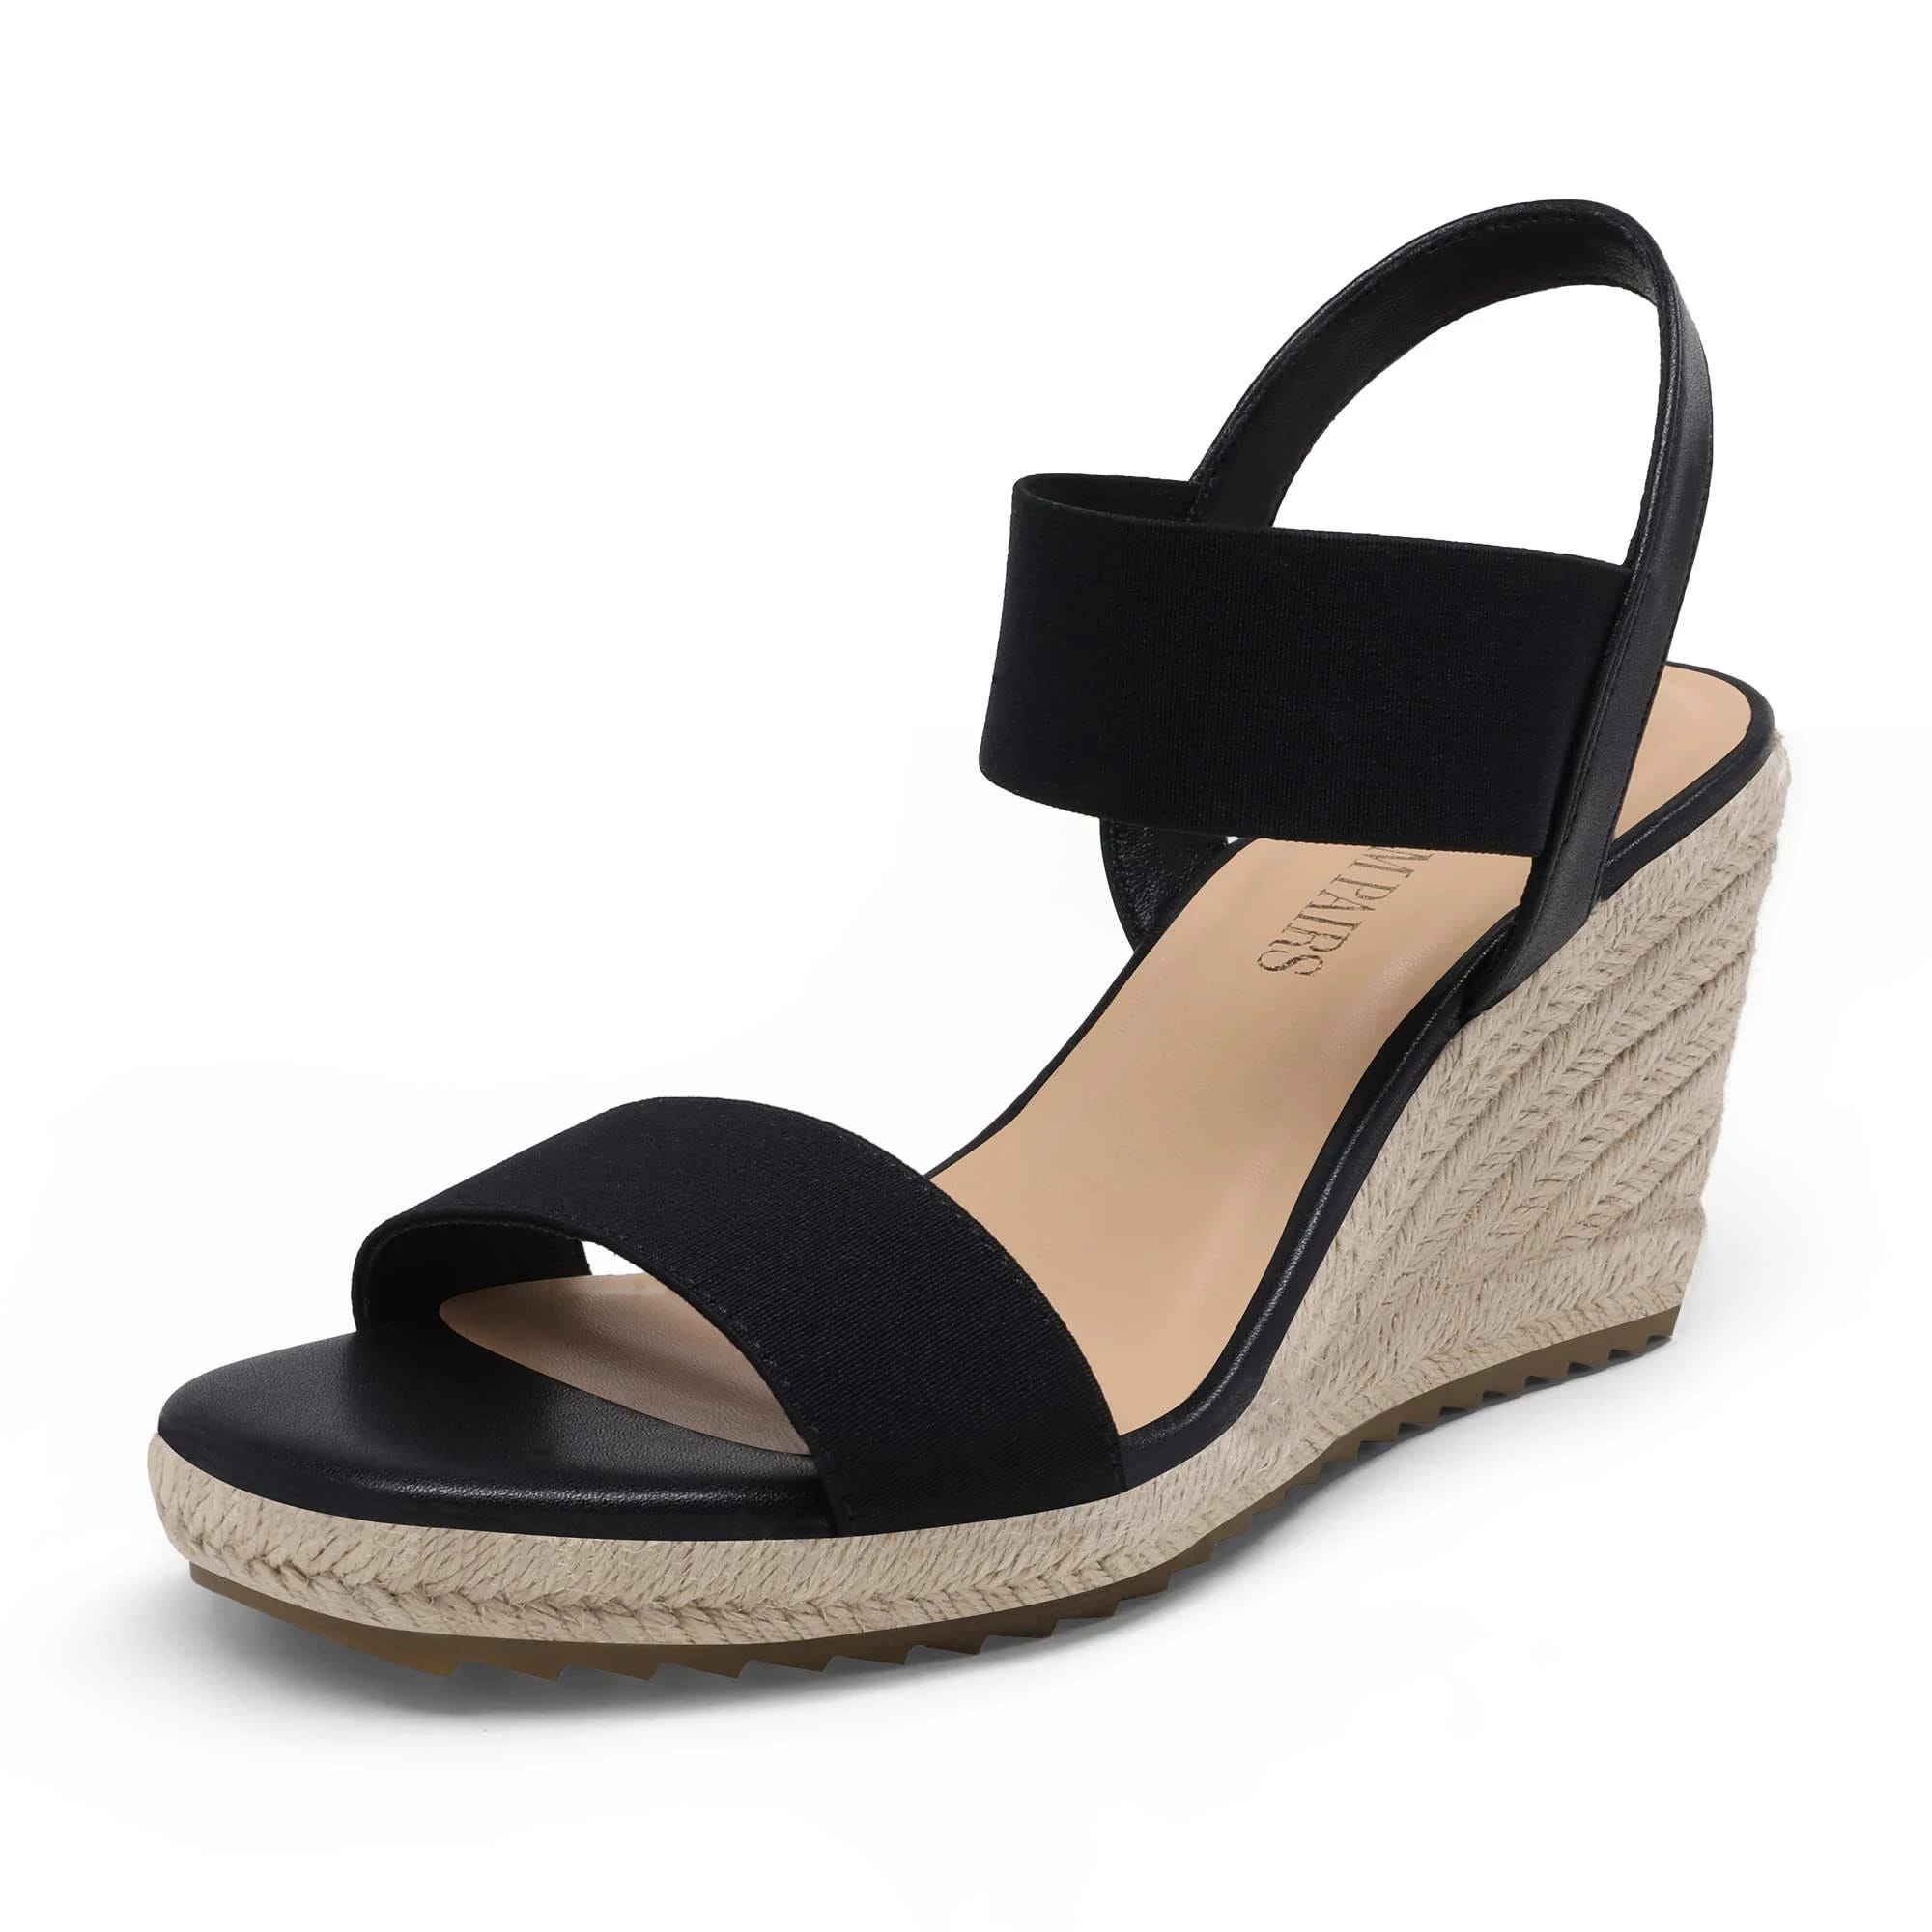 Stylish and Comfortable Adjustable Platform Sandals | Image